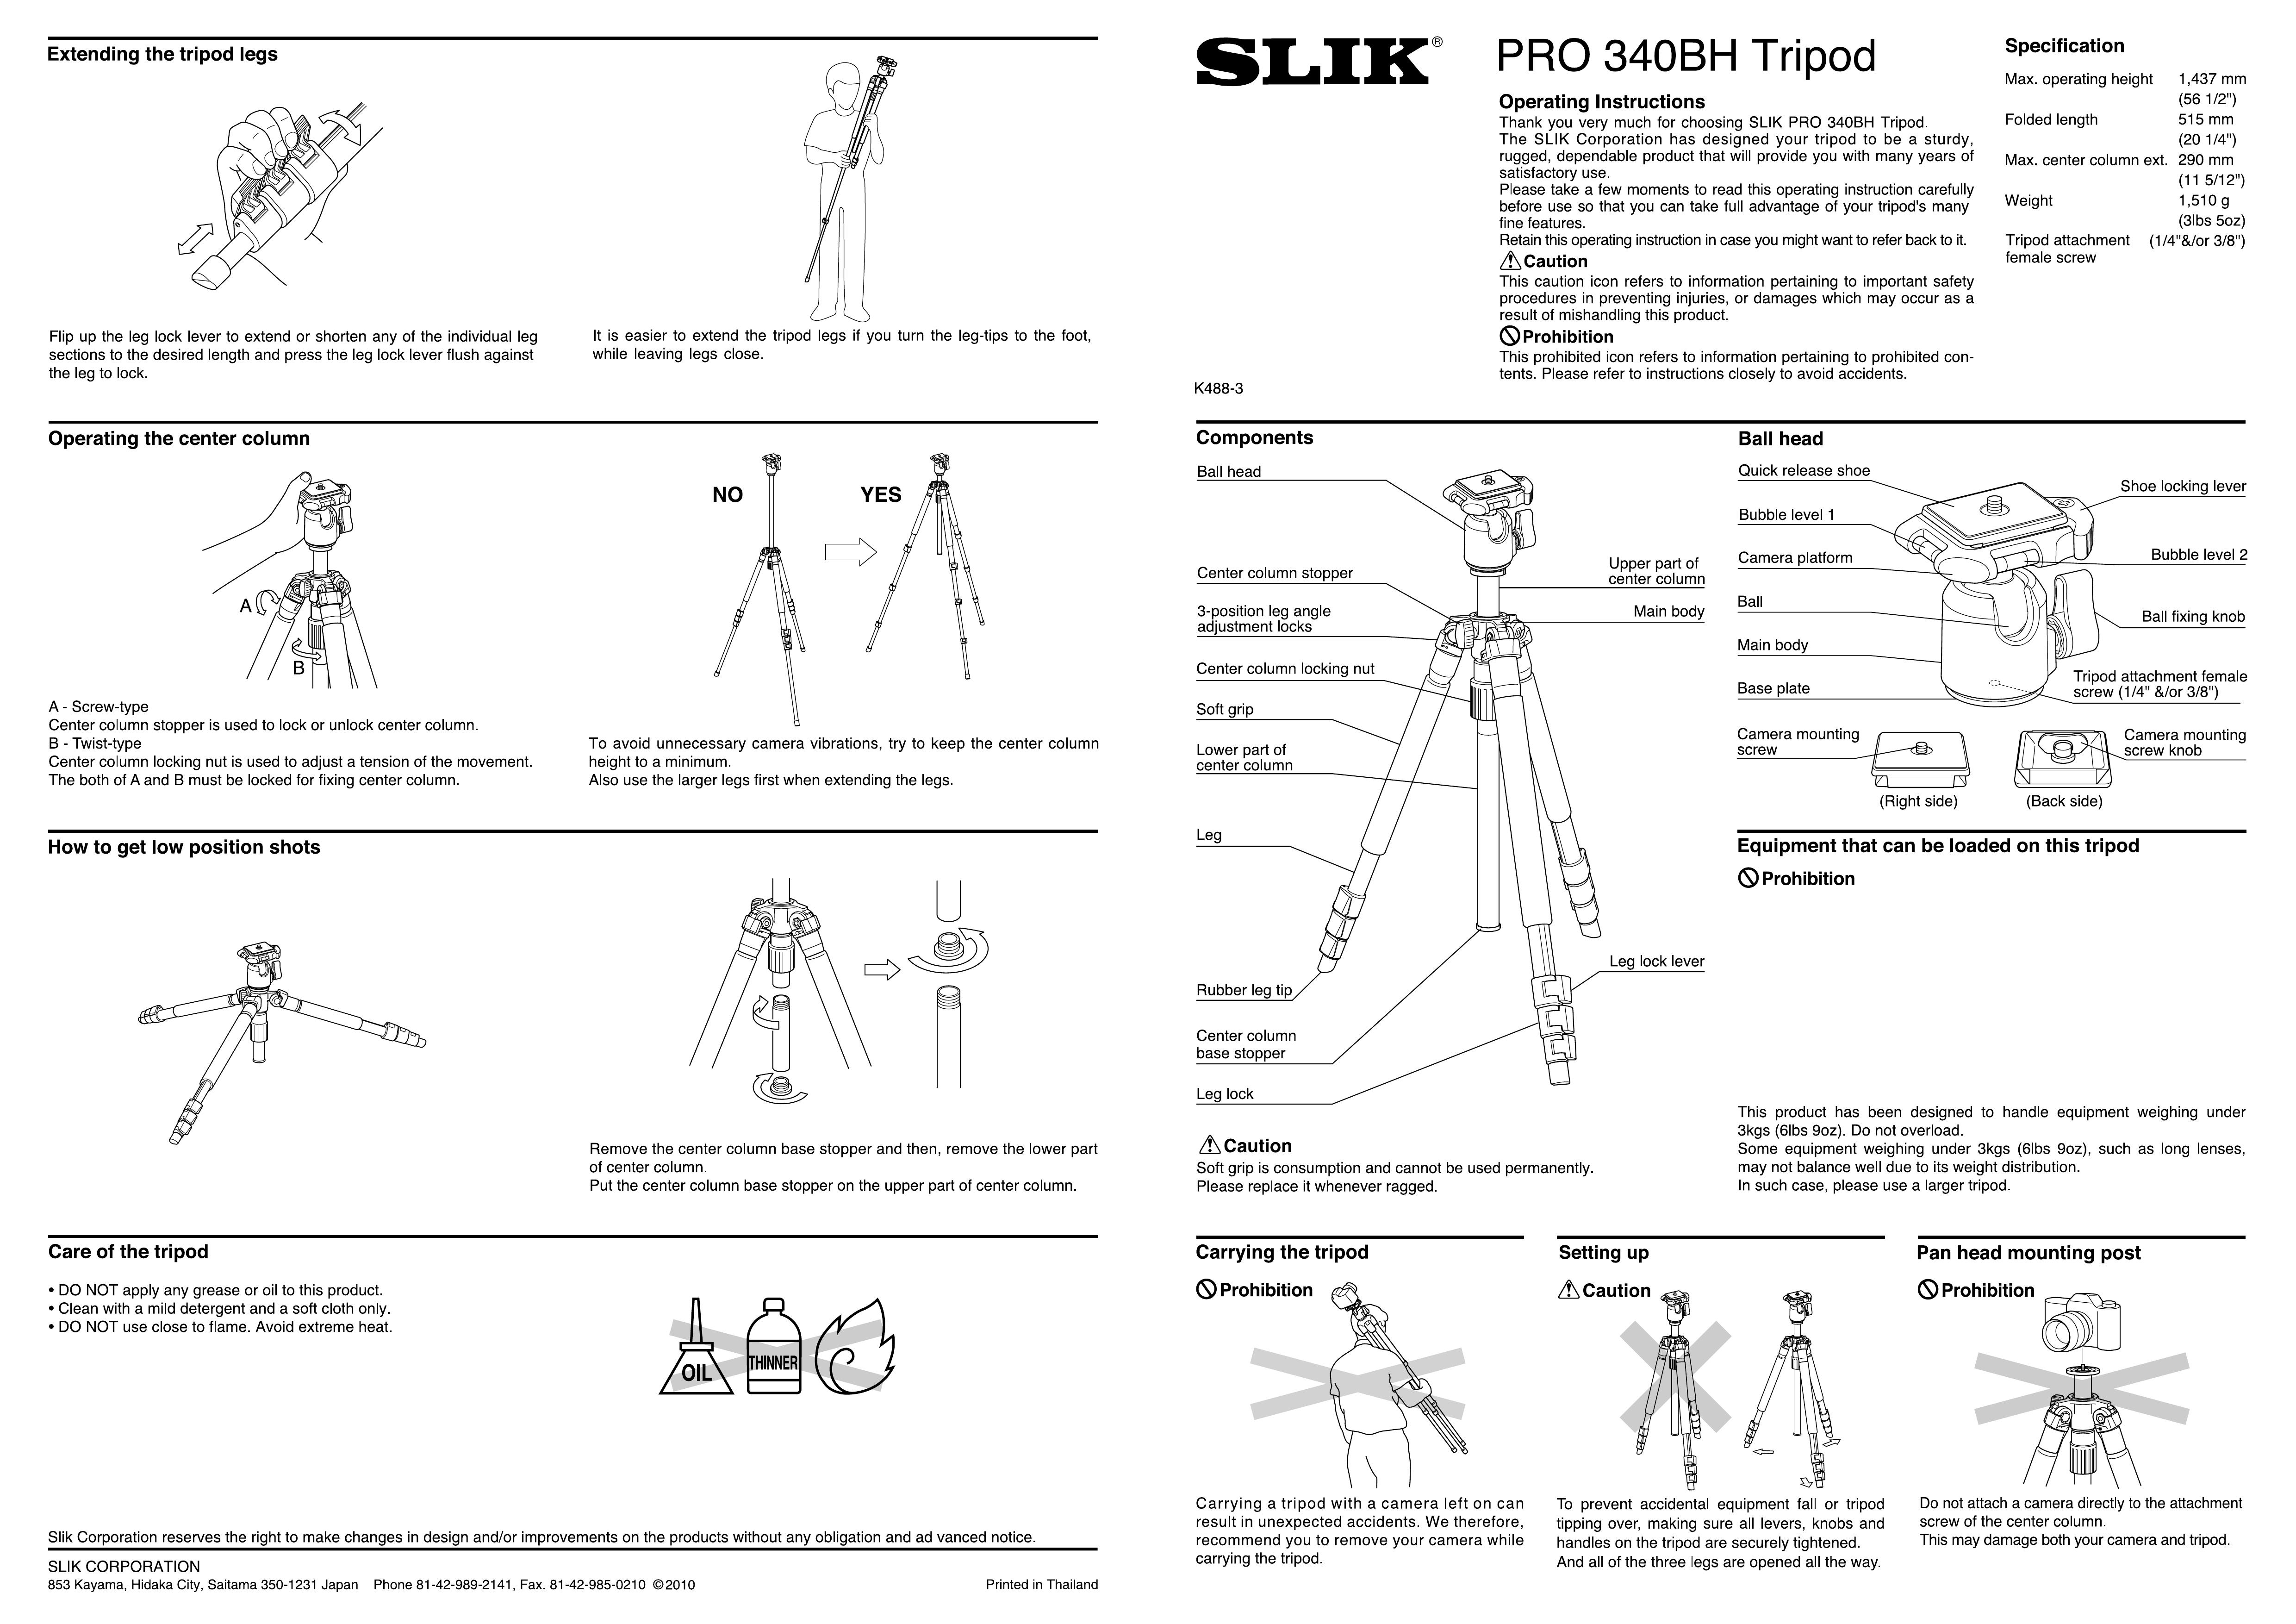 SLIK PRO 340BH TRIPOD Camcorder Accessories User Manual